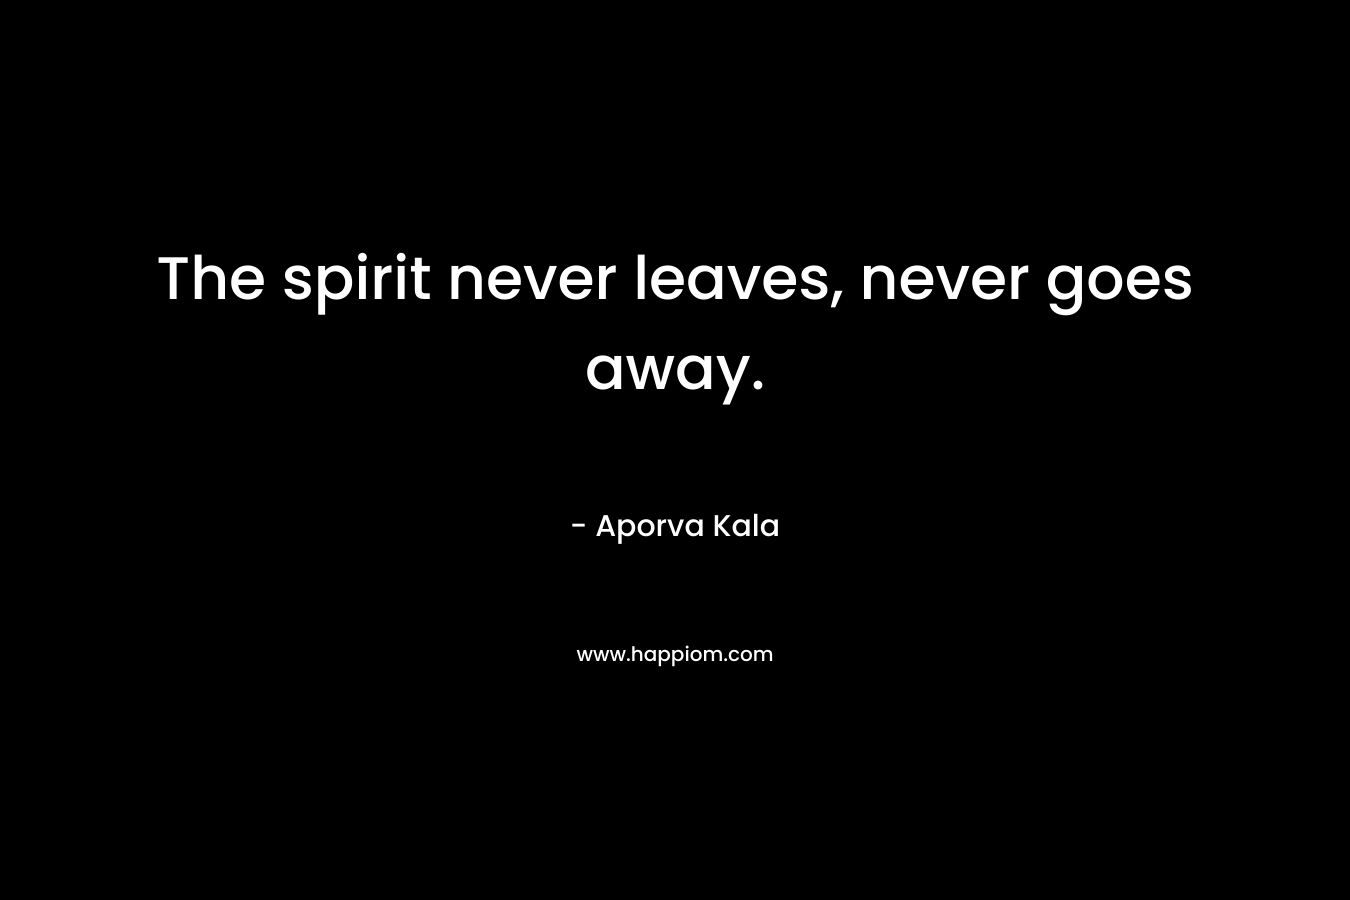 The spirit never leaves, never goes away.